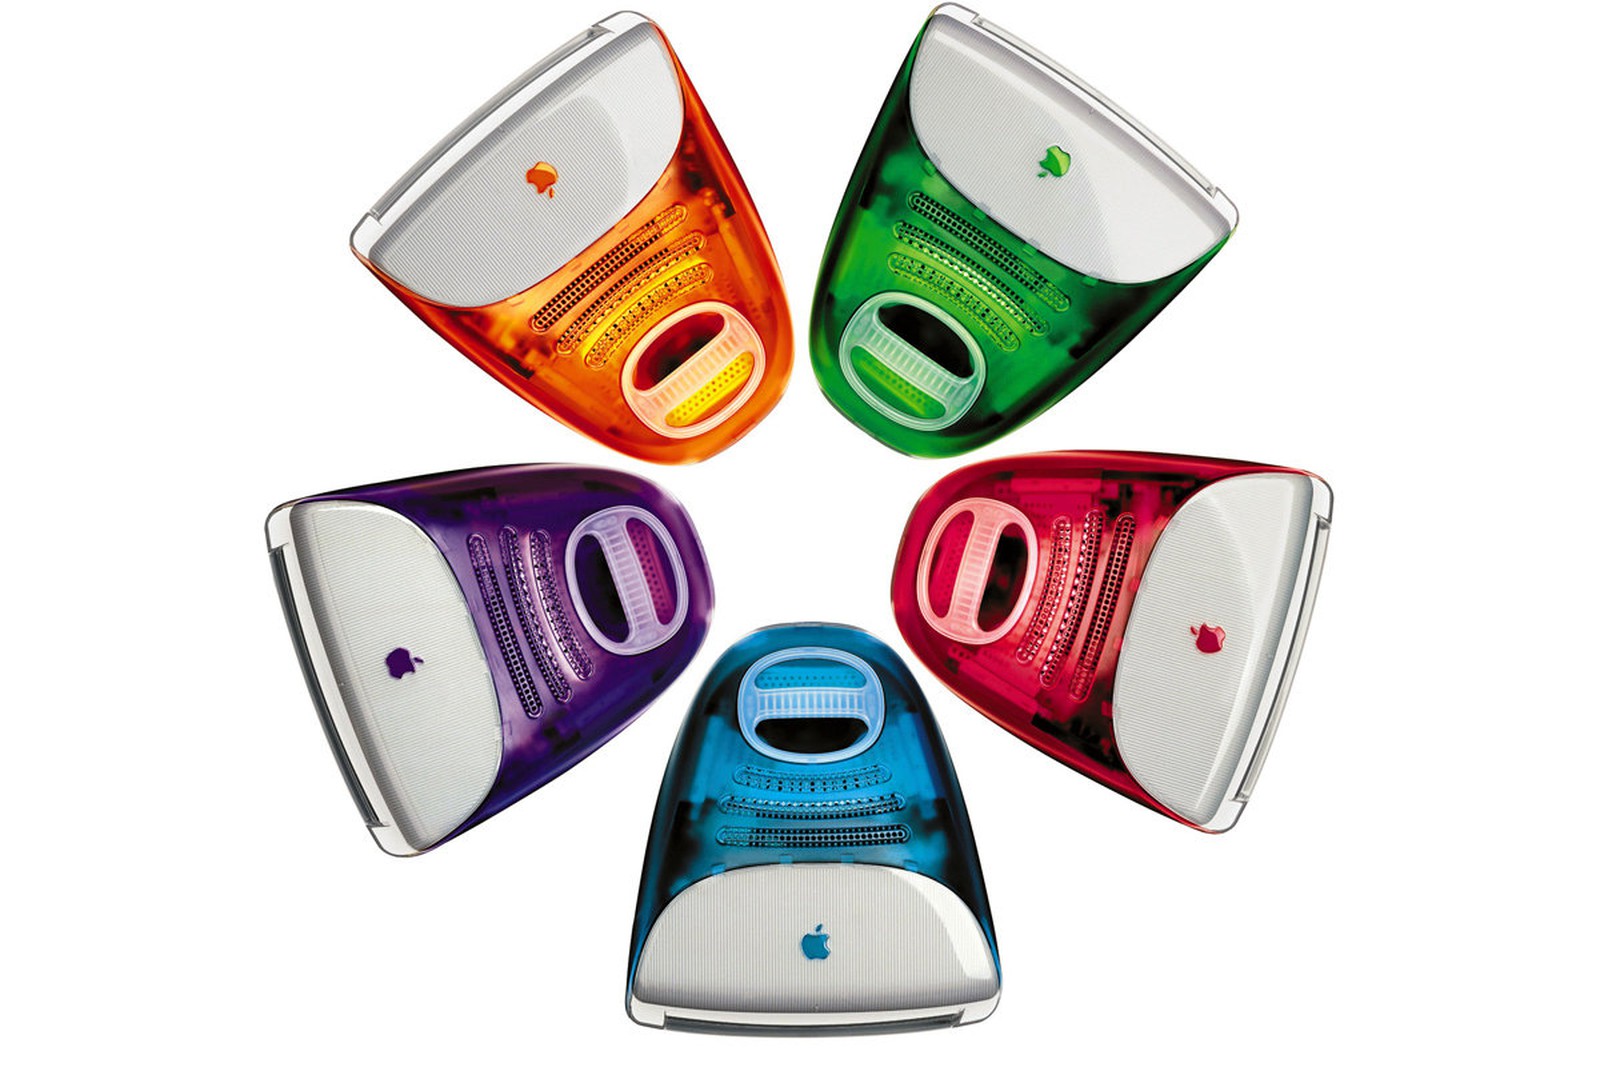 iMac G3 | i 5 Iconici Colori